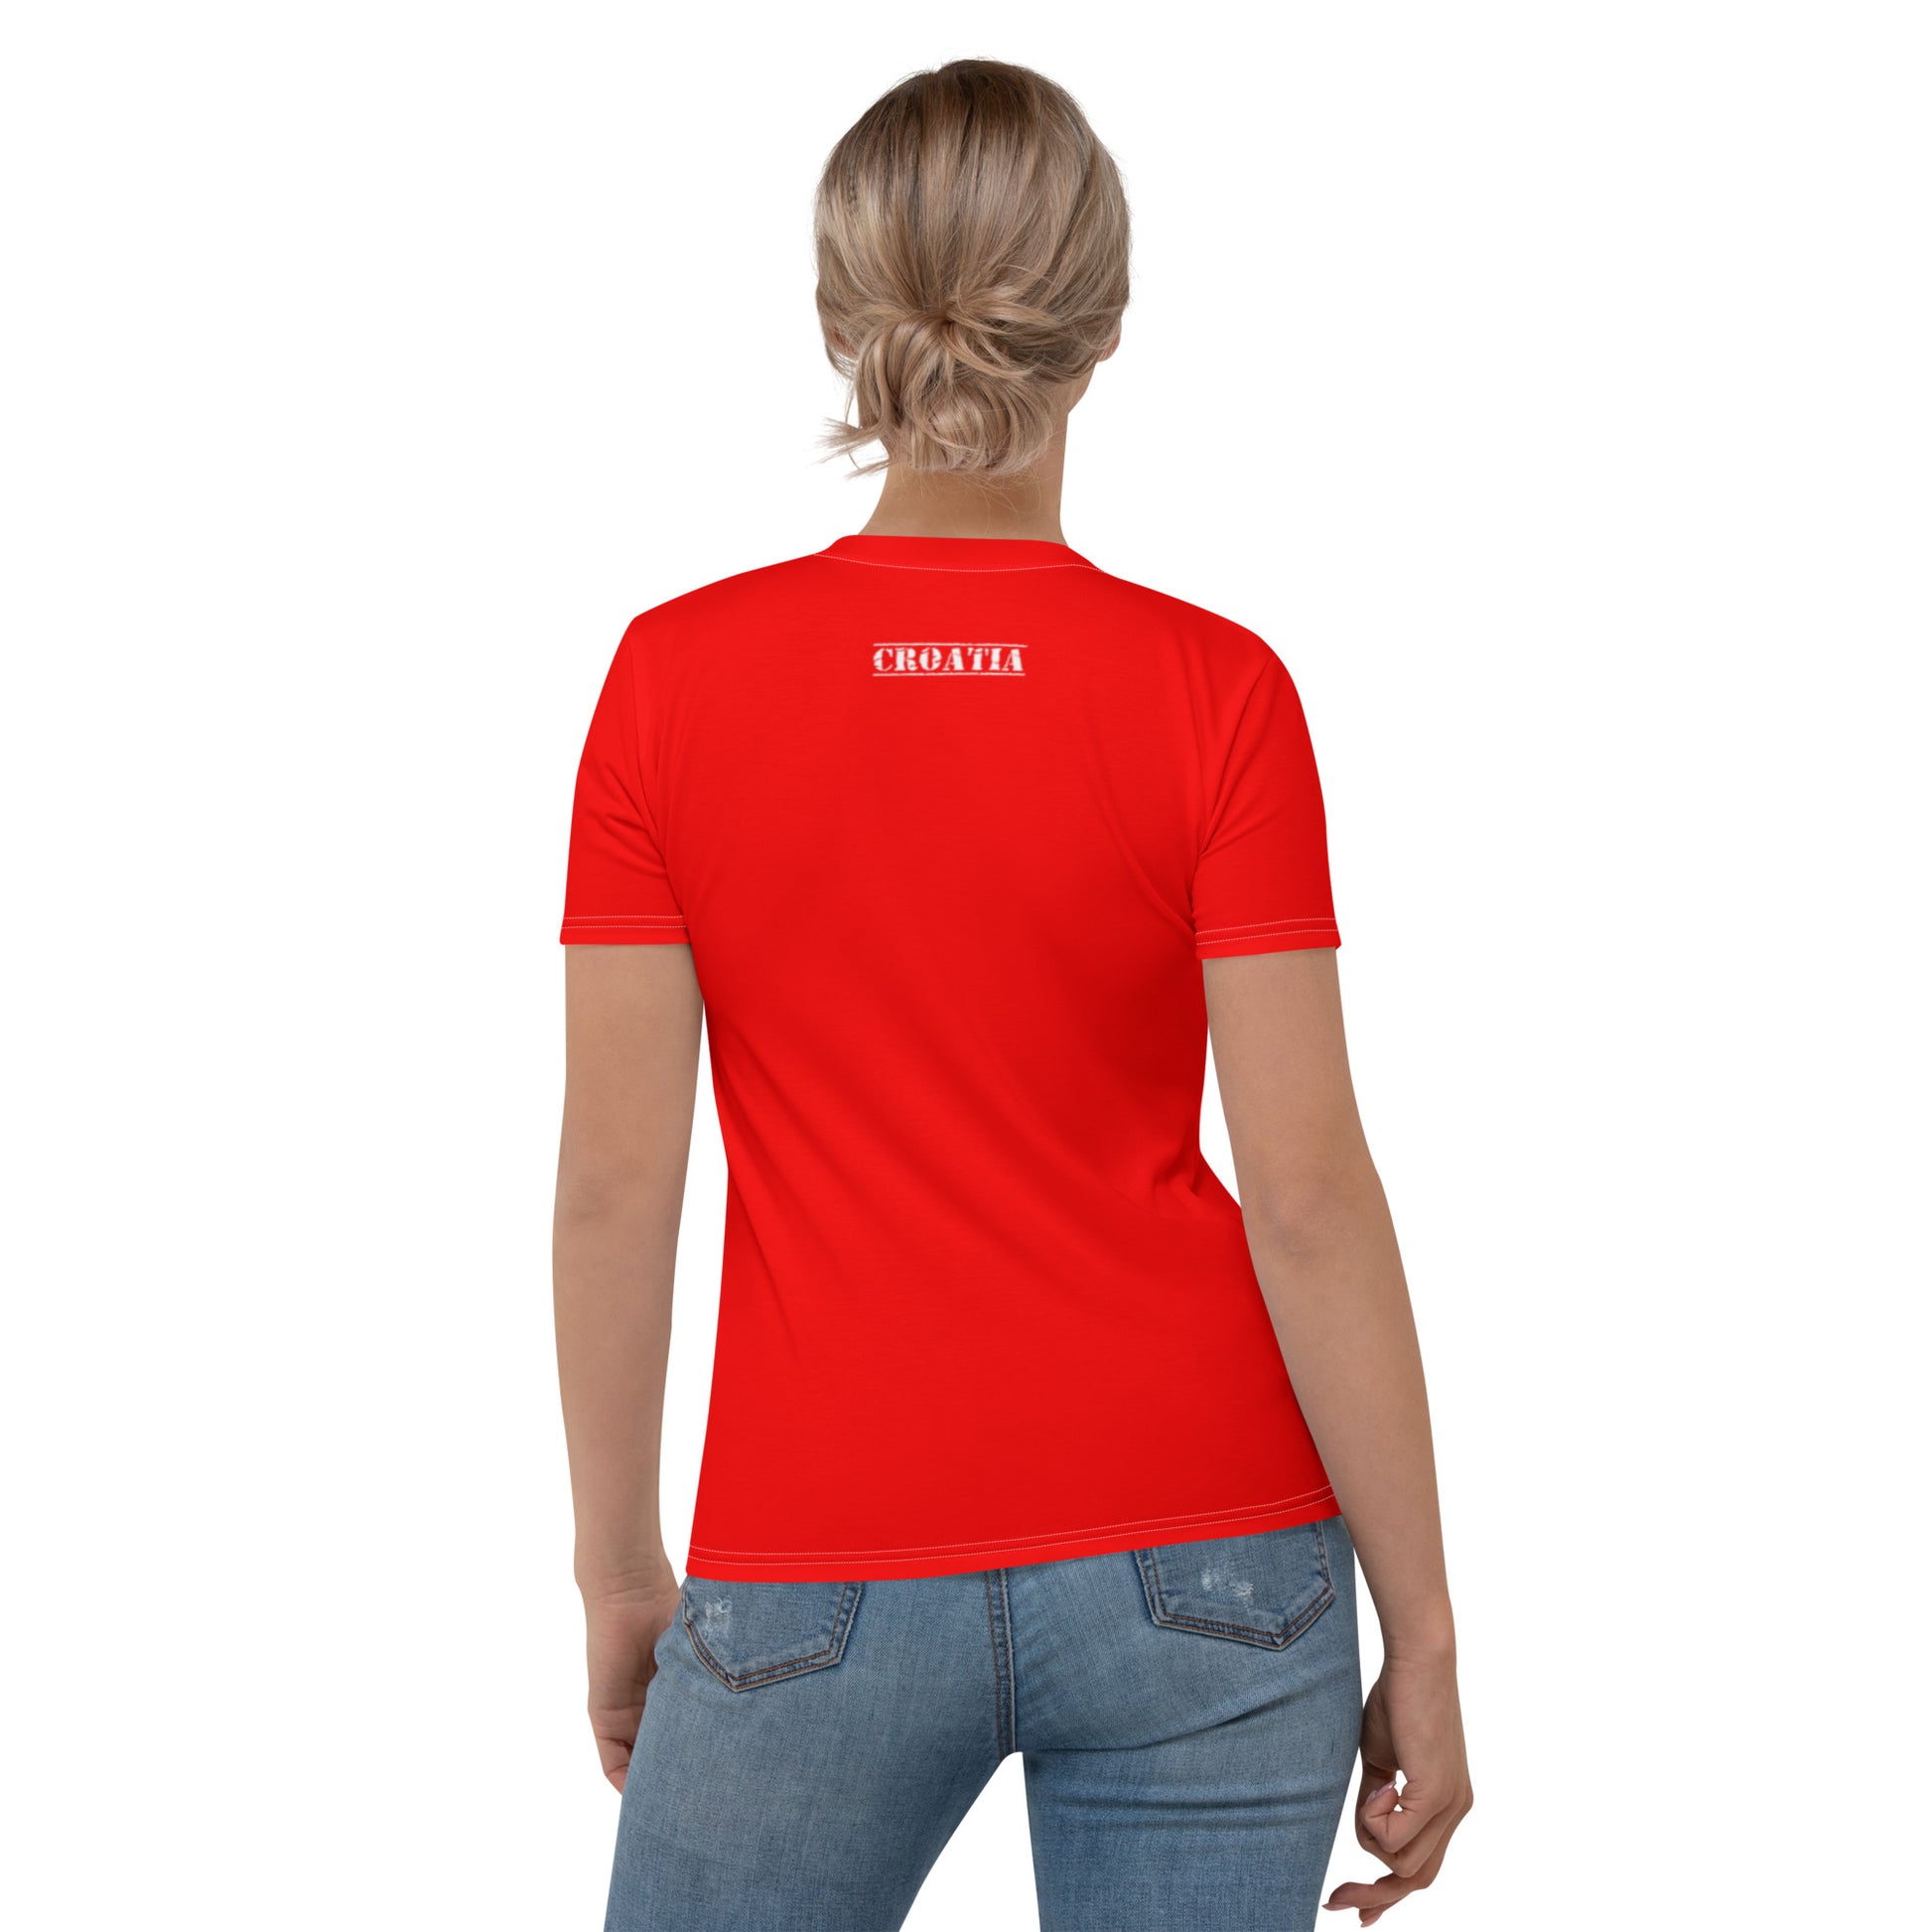 Croatian Flag Shirt / Croatia Style Clothing For Womenback Croatian Flag Shirt / Croatia Style Clothing For Women